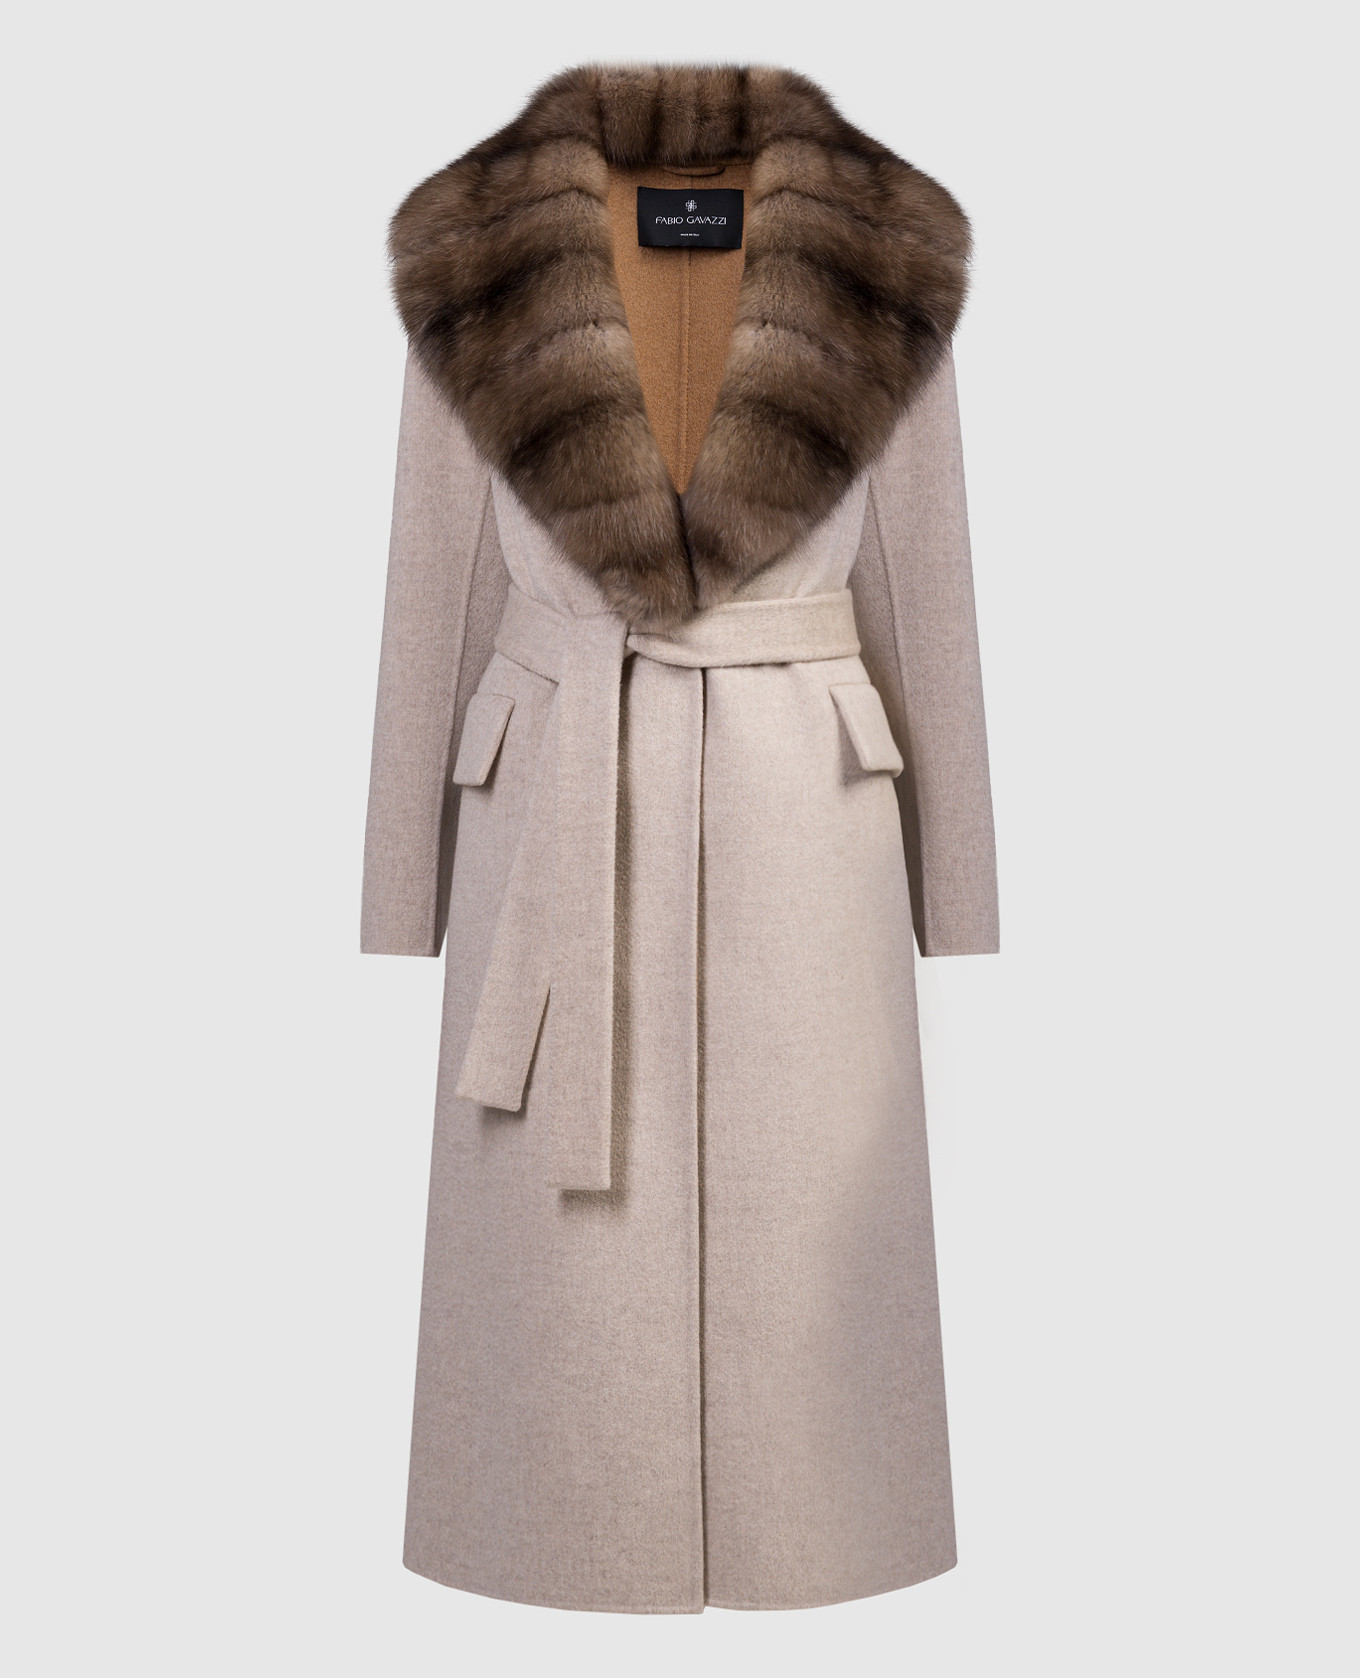 Beige cashmere coat with sable fur